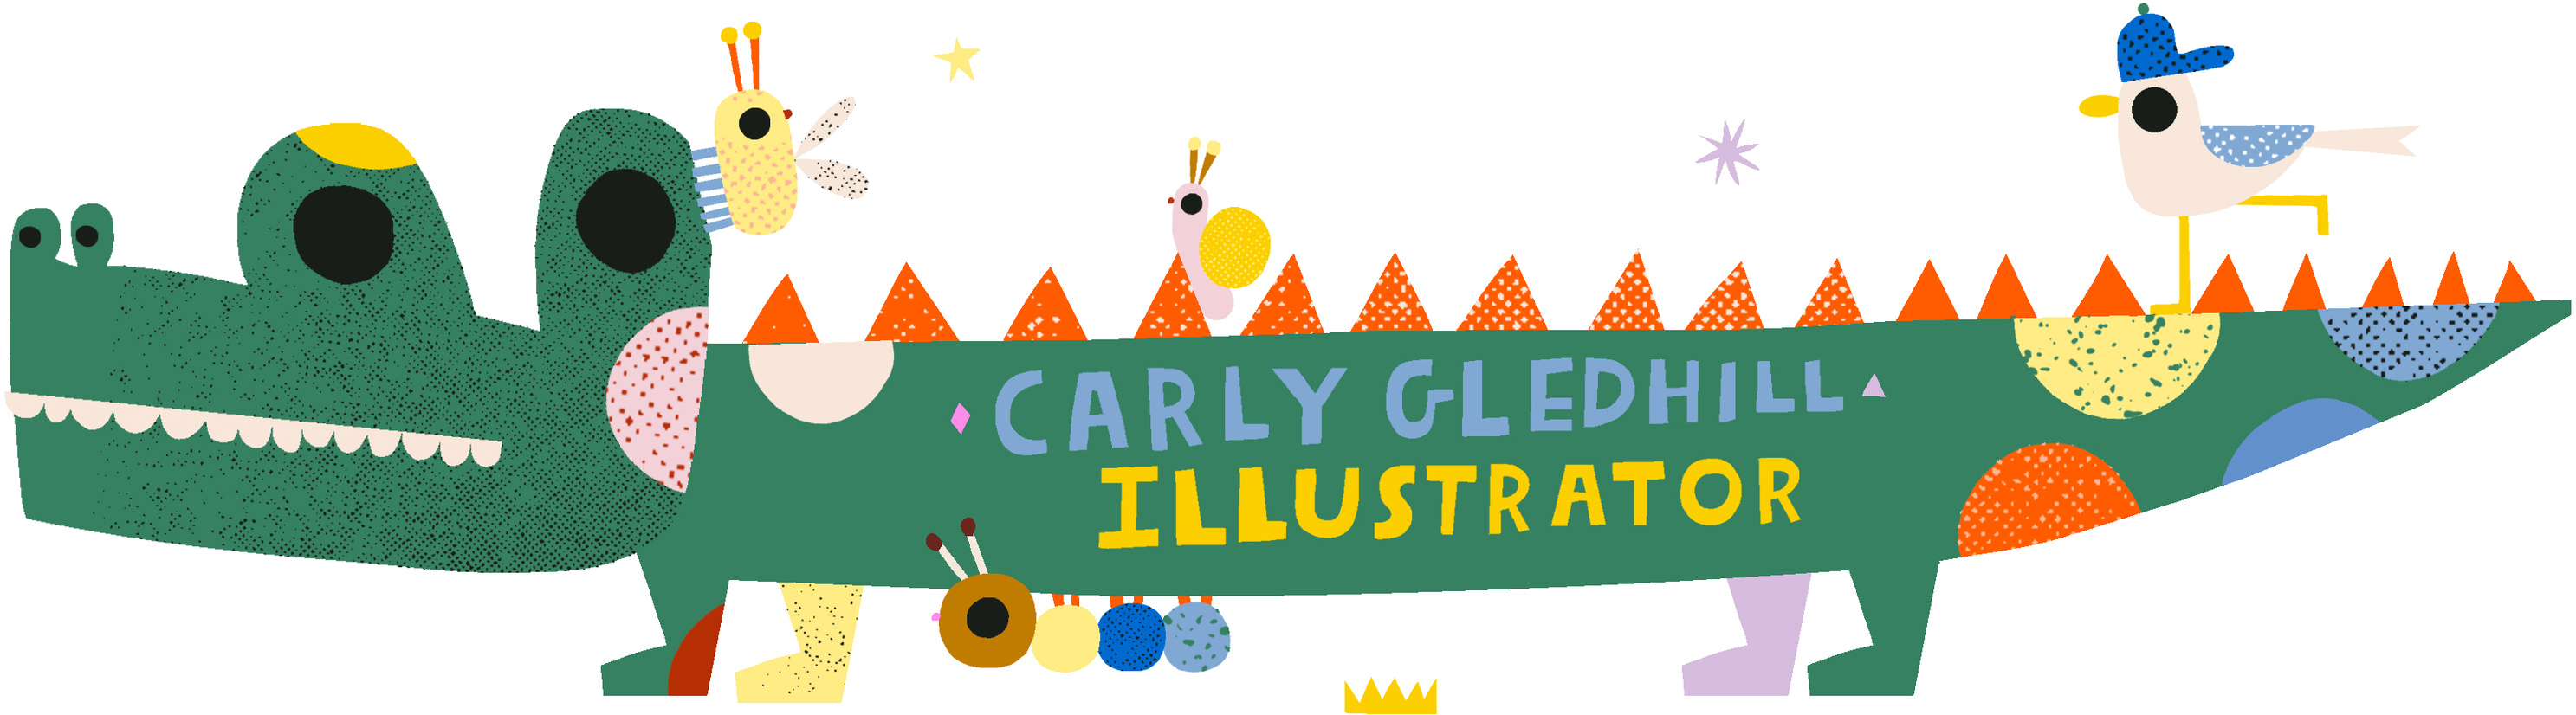 Carly Gledhill illustration